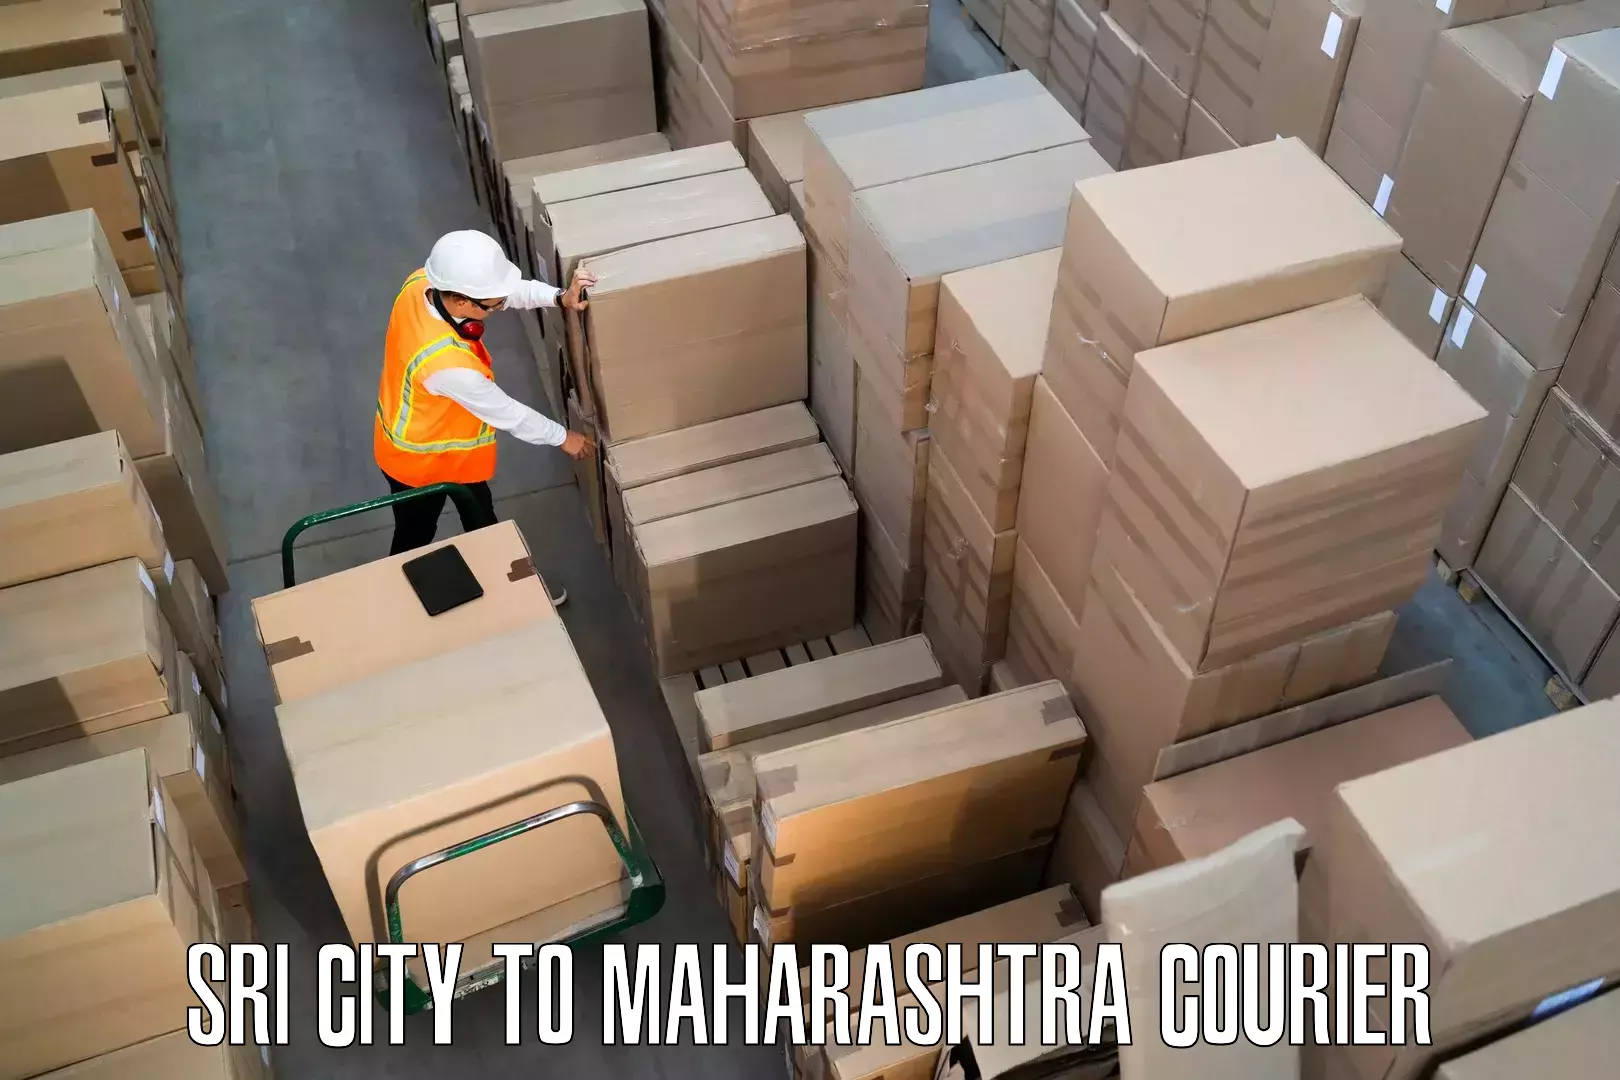 Efficient moving company Sri City to Tata Institute of Social Sciences Mumbai